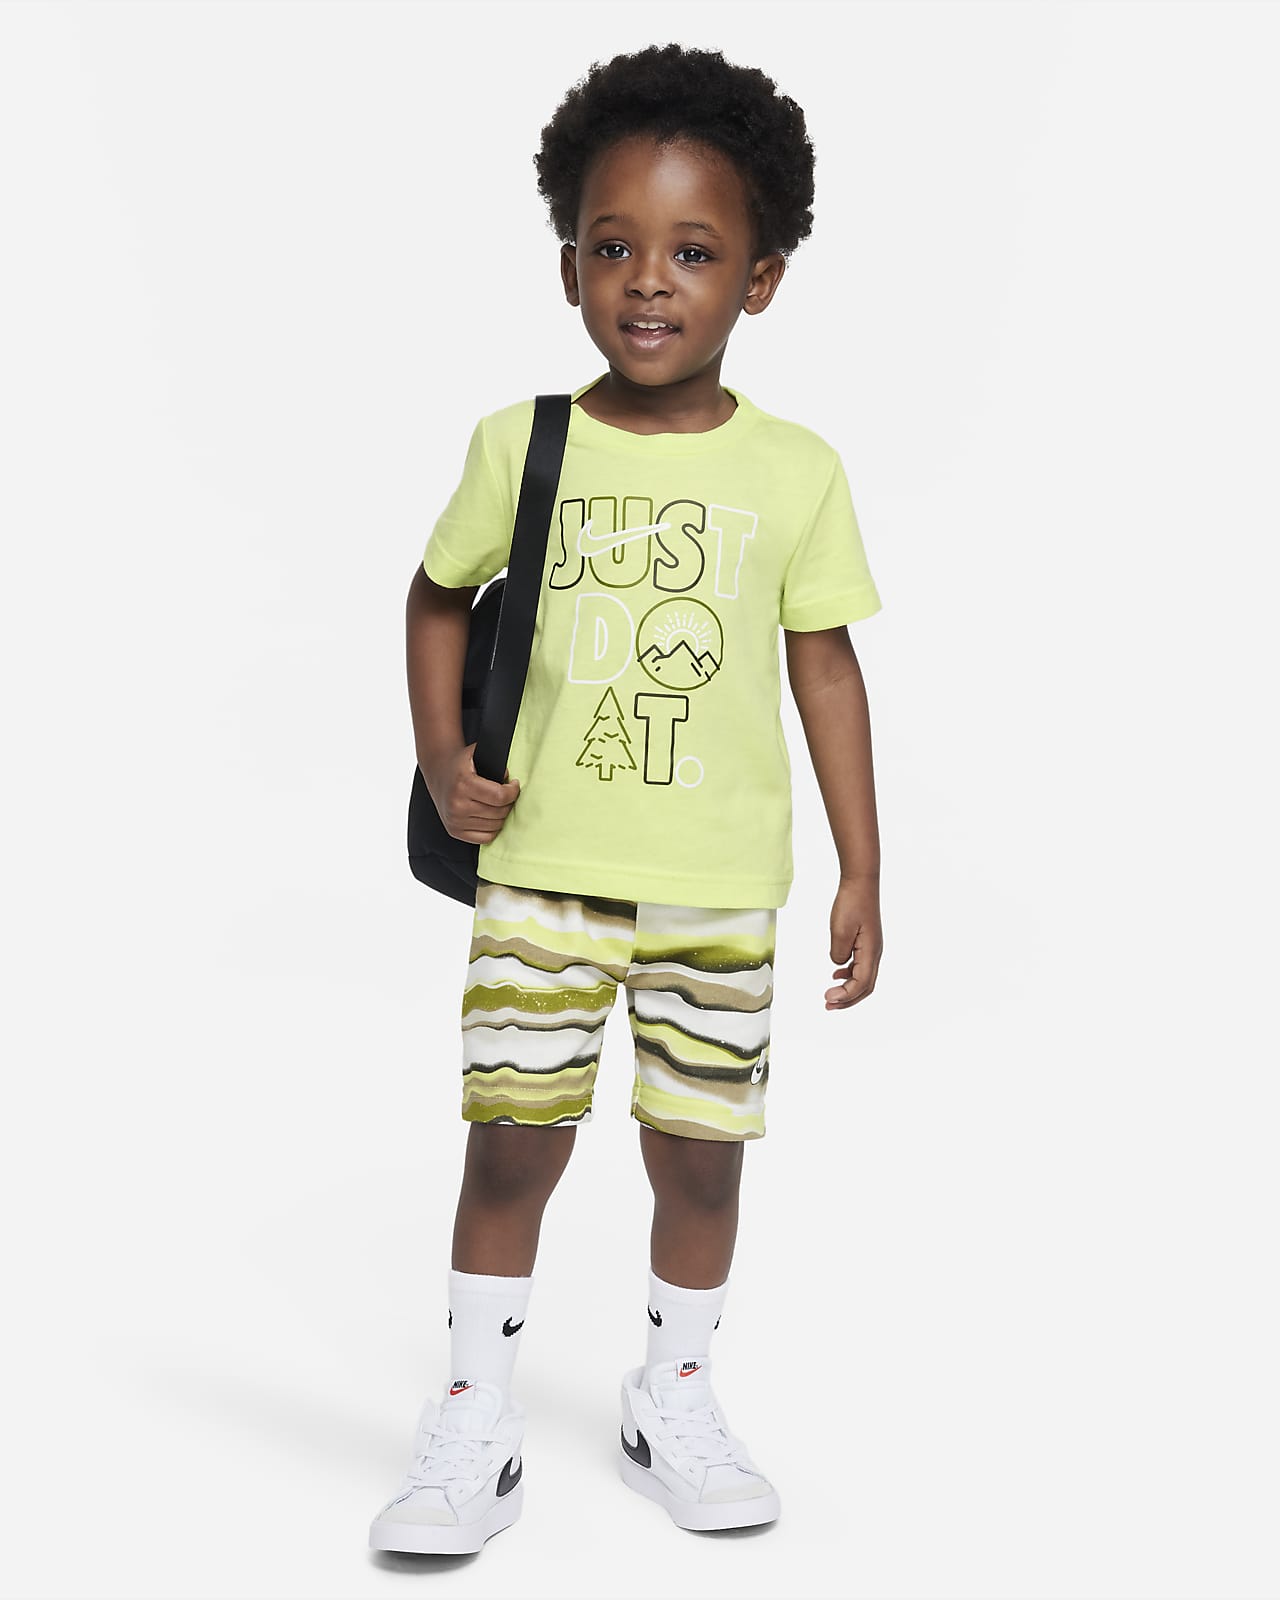 Nike Sportswear "Leave No Trace" Printed Shorts Set Toddler 2-Piece Set